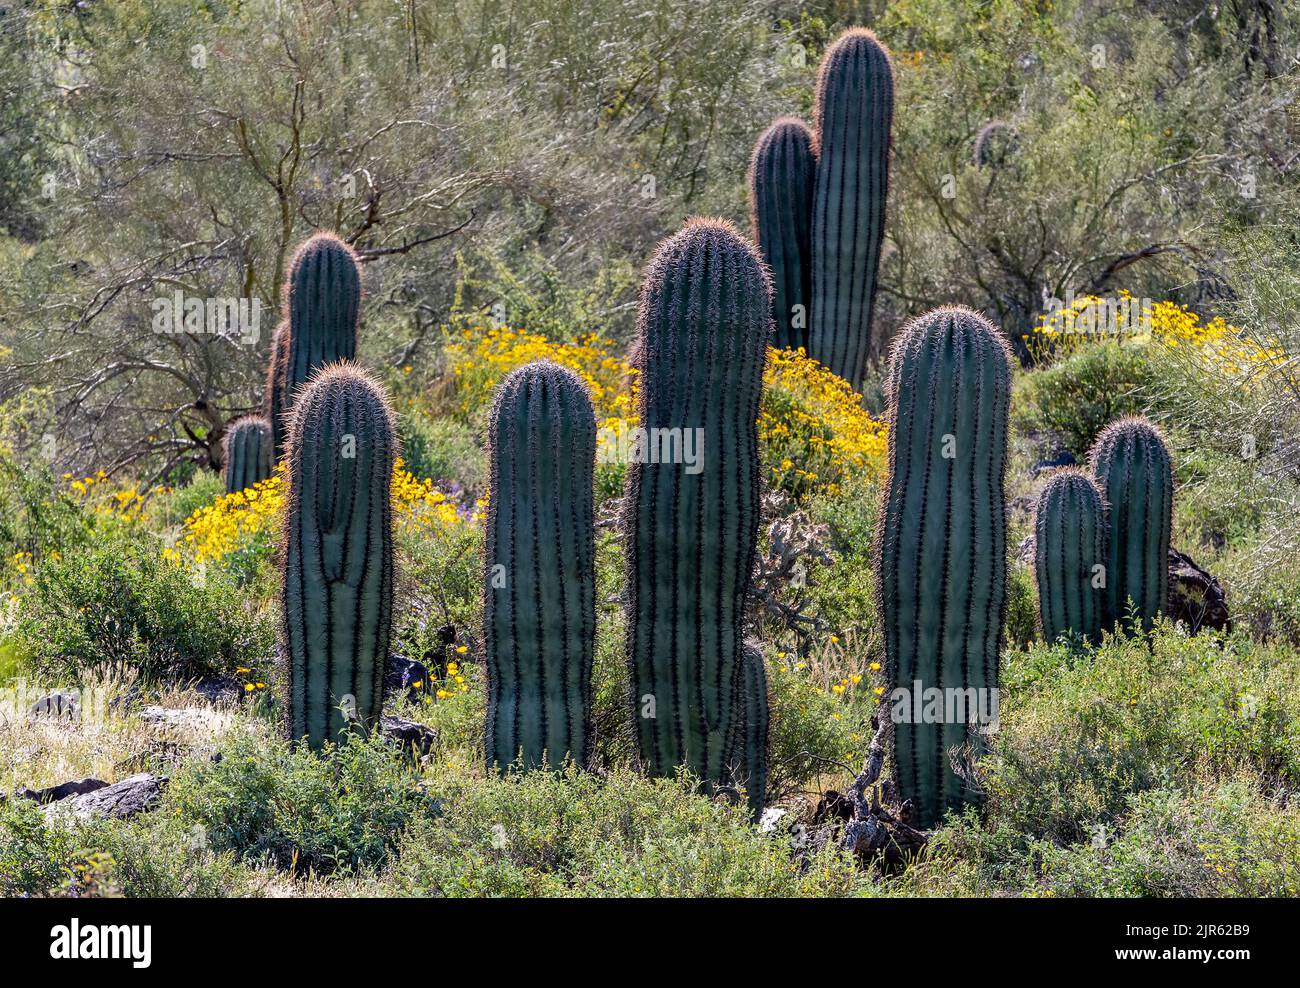 Juvenile saguaros (Carnegiea gigantea,) from Picacho Peak State Park (Arizona, USA) in March 2020. Stock Photo